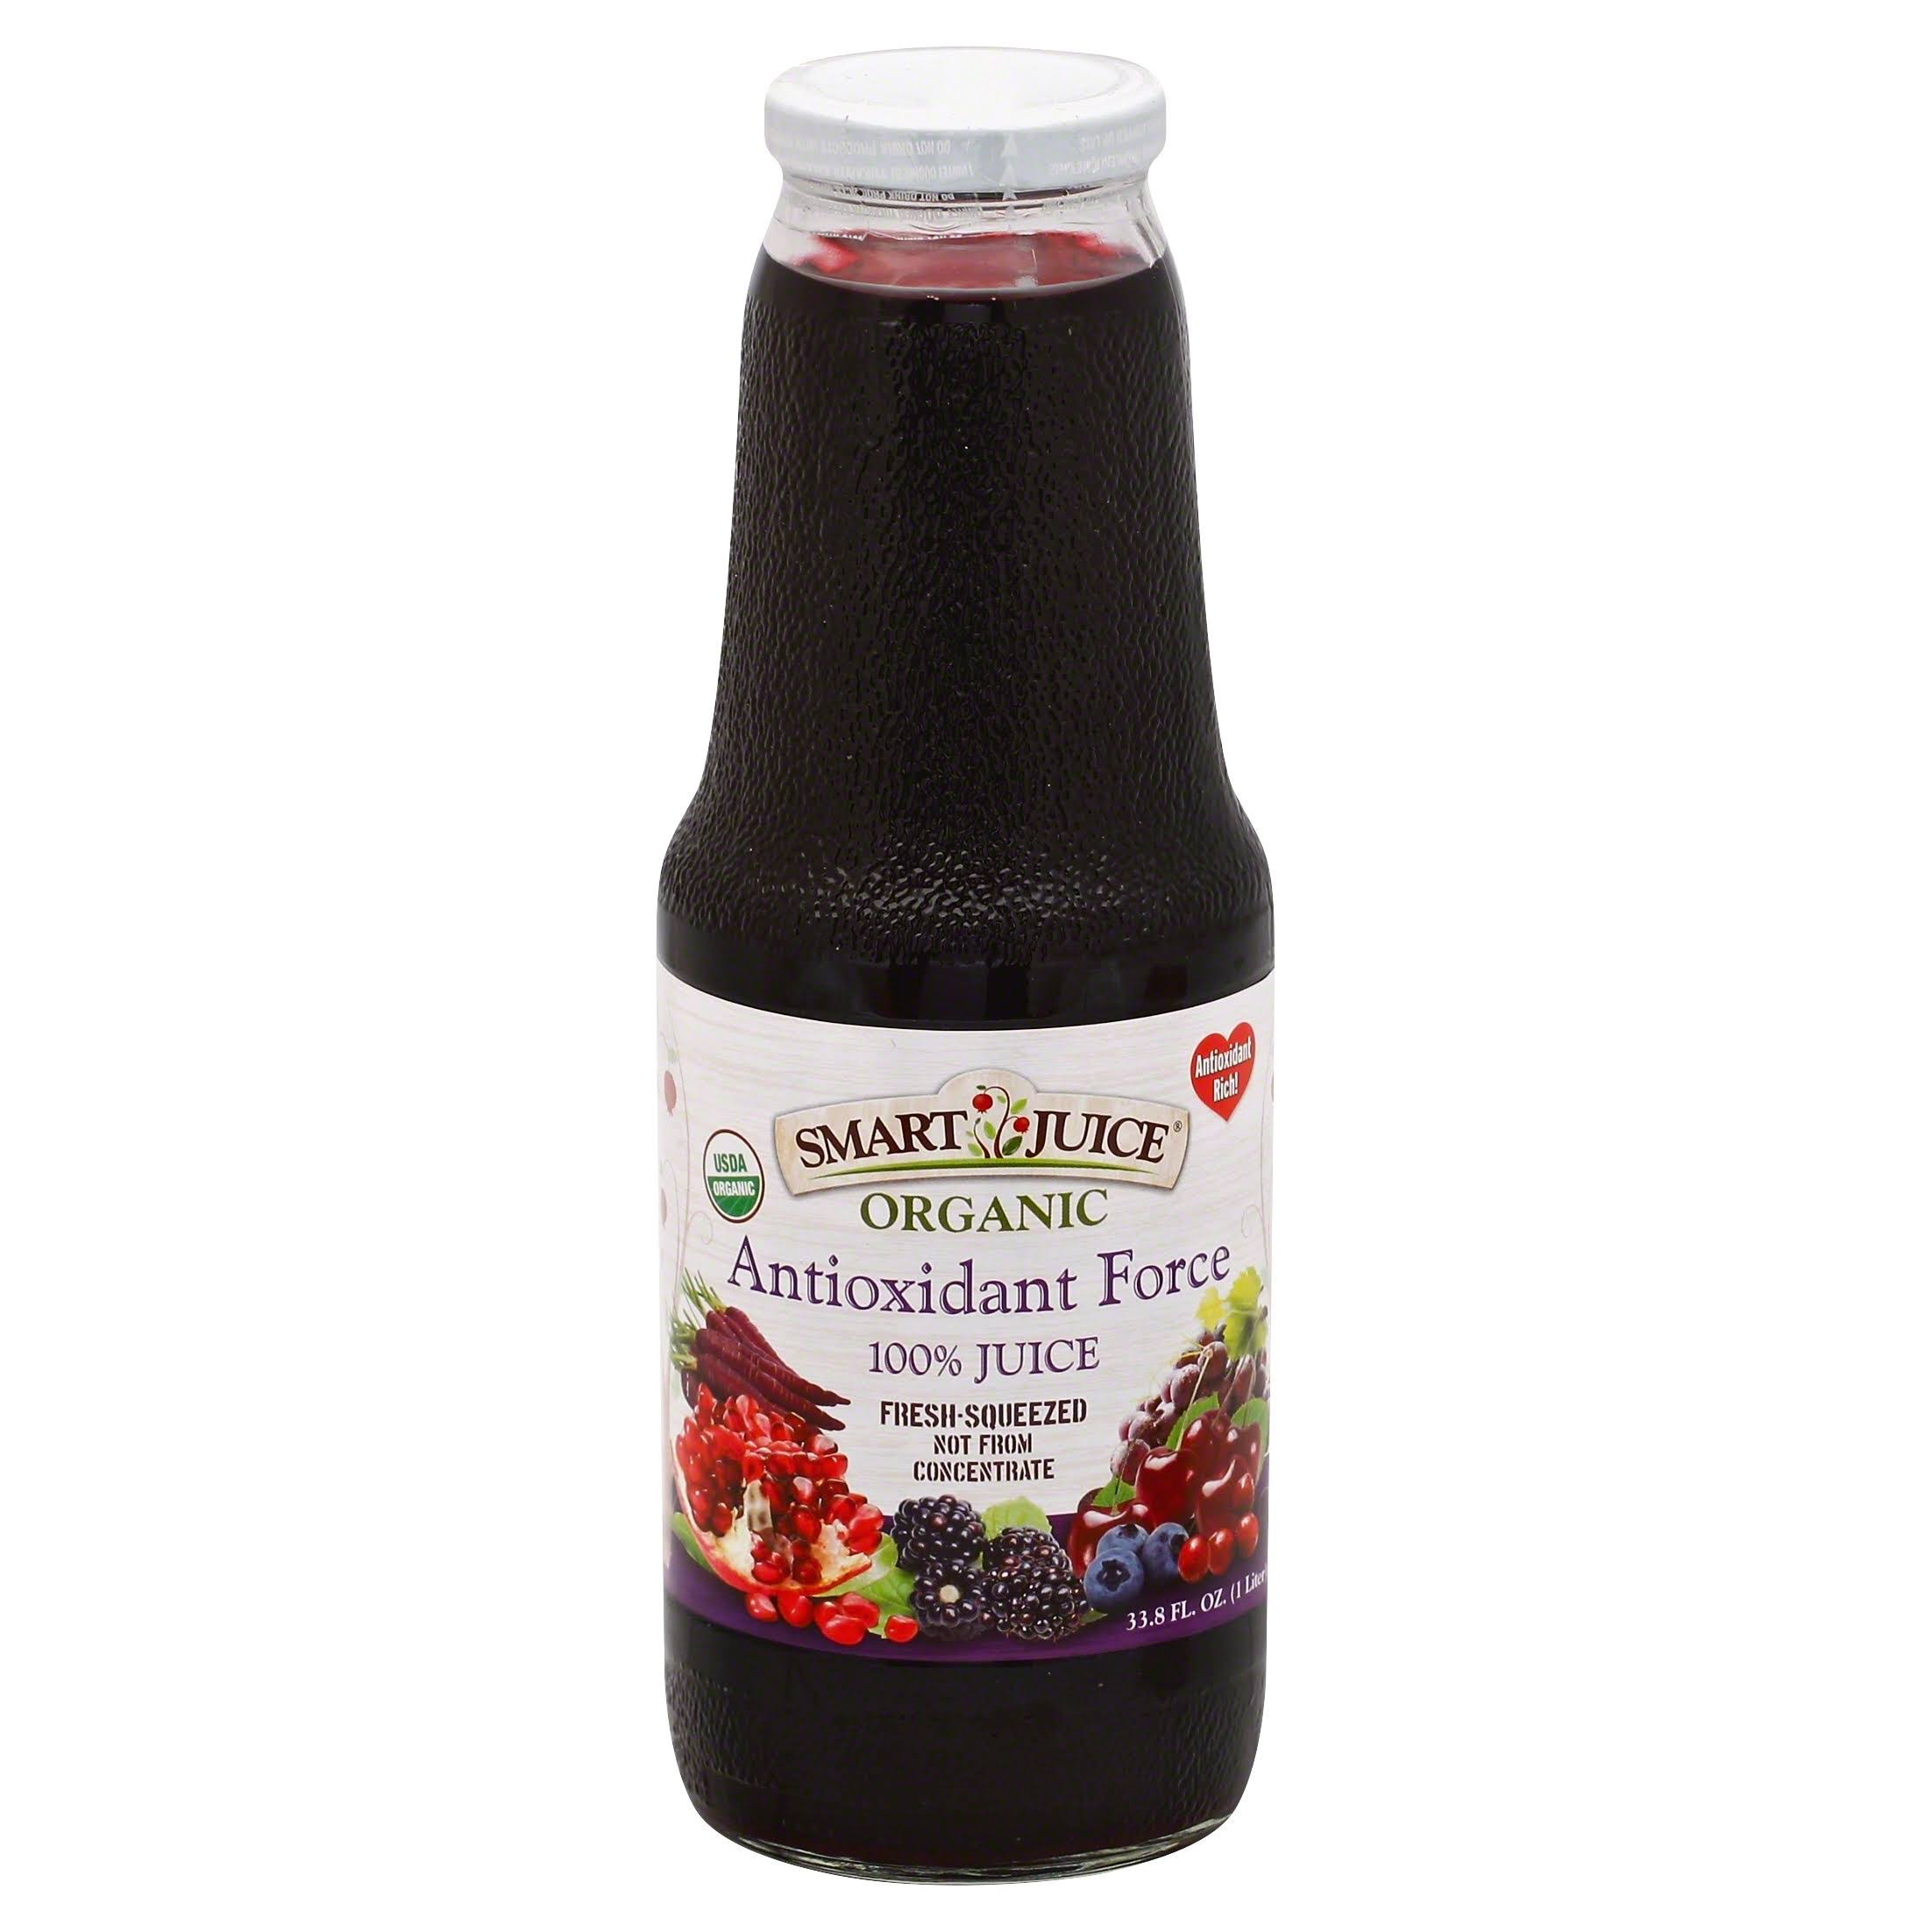 Smart Juice Organic Antioxidant Force Juice - 33.8oz